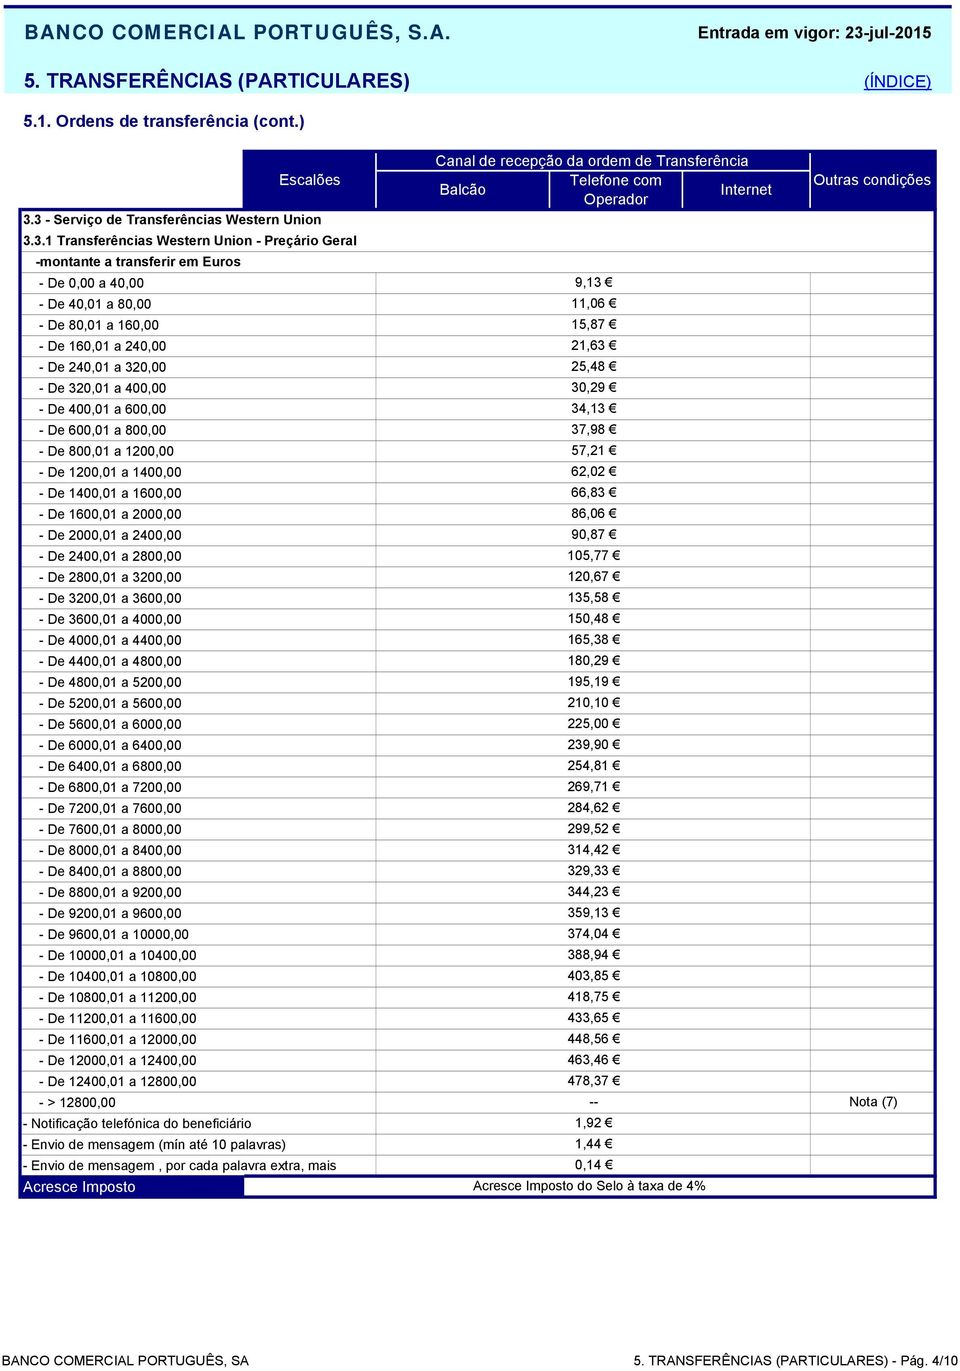 3 Serviço de Transferências Western Union 3.3.1 Transferências Western Union Preçário Geral montante a transferir em Euros De 0,00 a 40,00 De 40,01 a 80,00 De 80,01 a 160,00 De 160,01 a 240,00 De